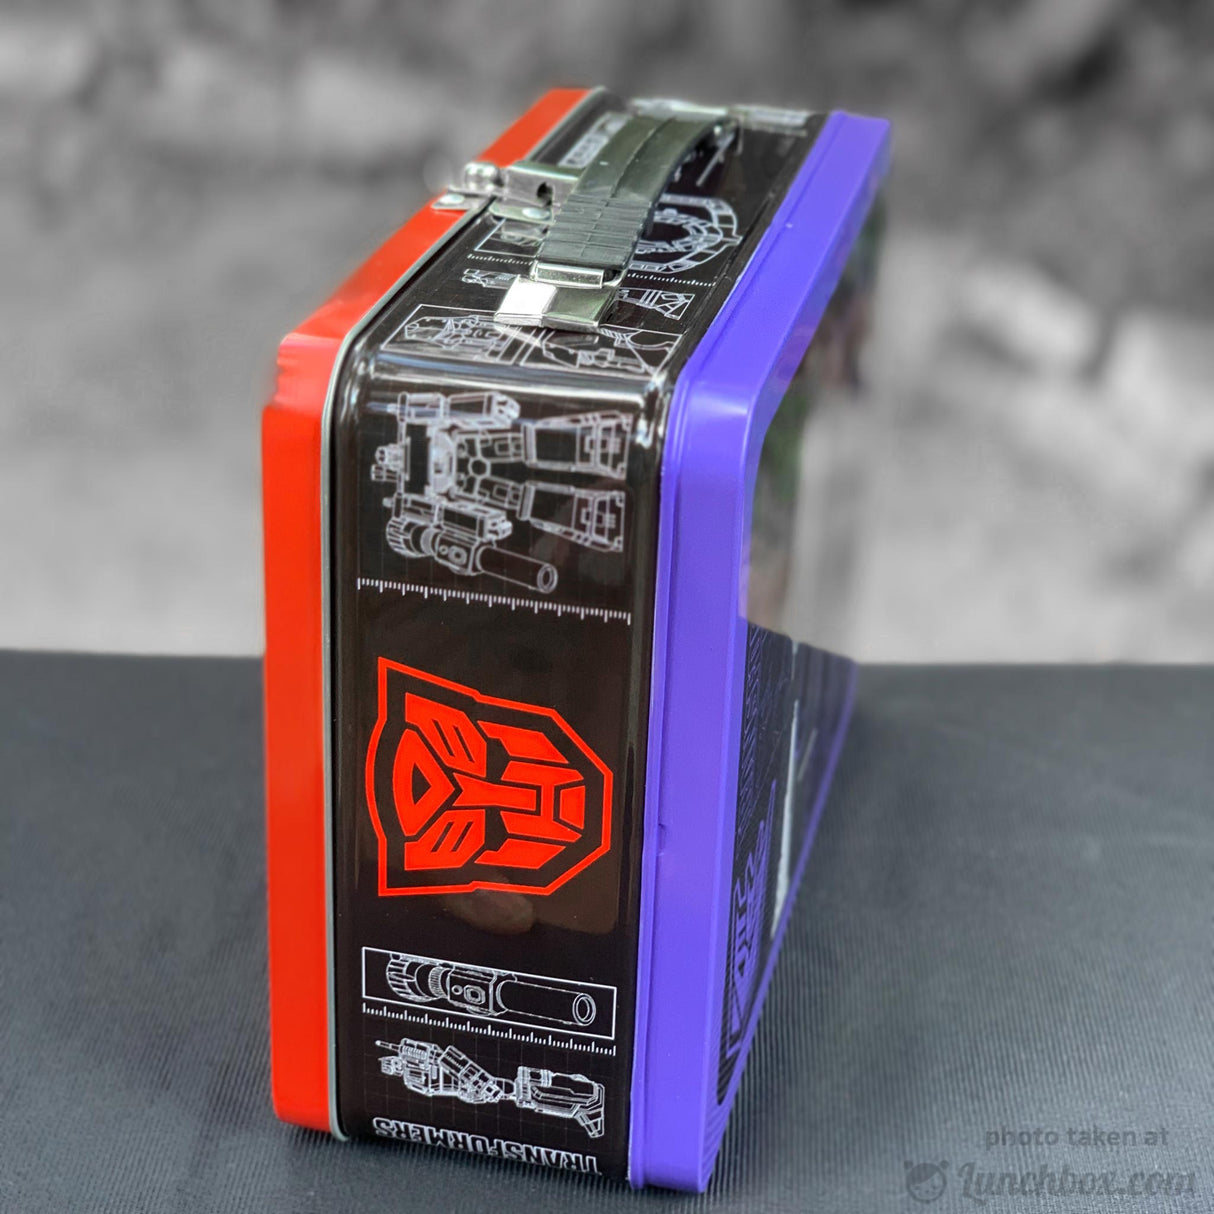 Transformers Metal Lunch Box